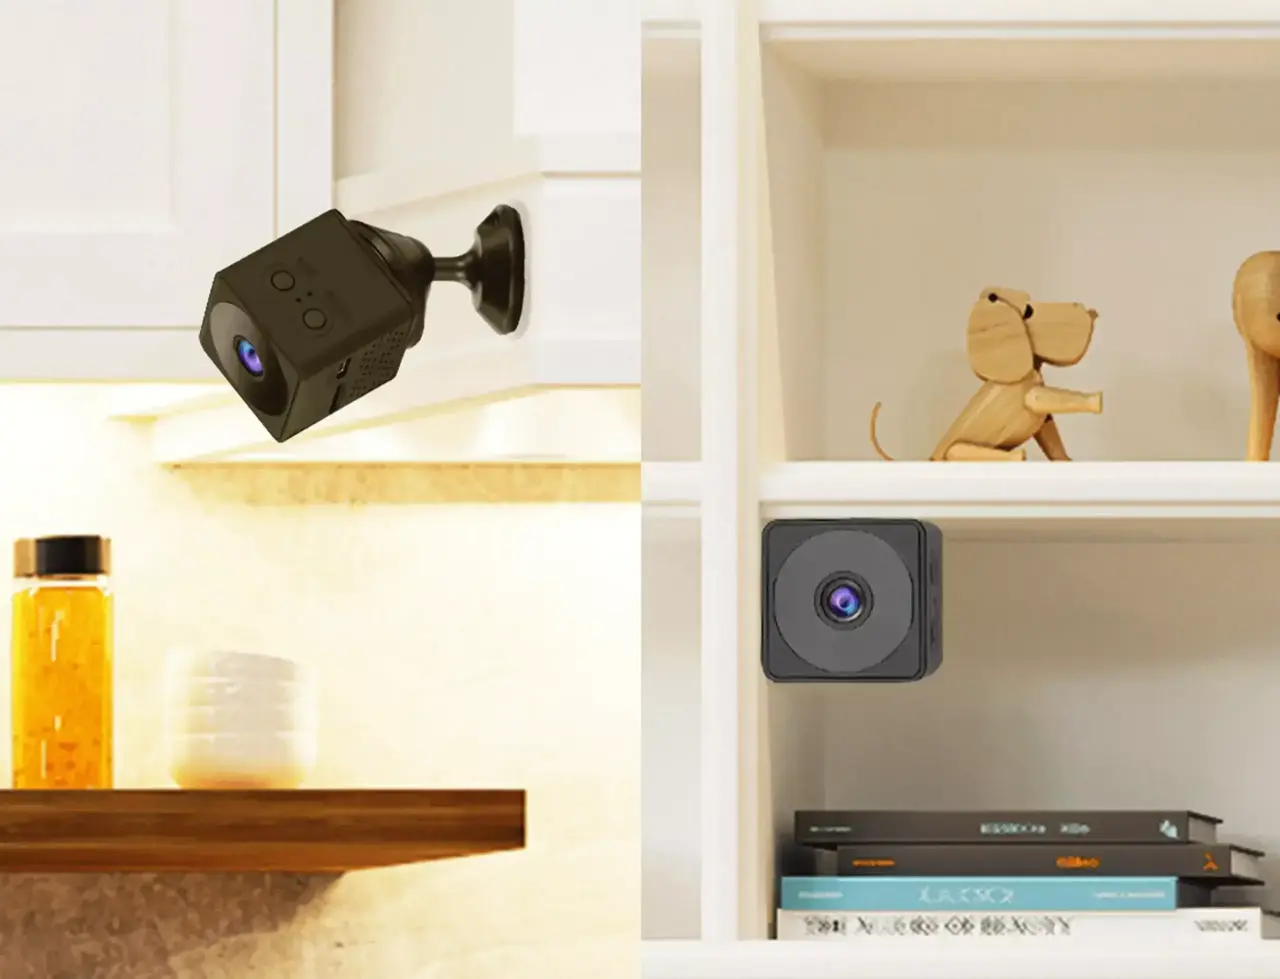 Dealeez mini camera placed on a shelf